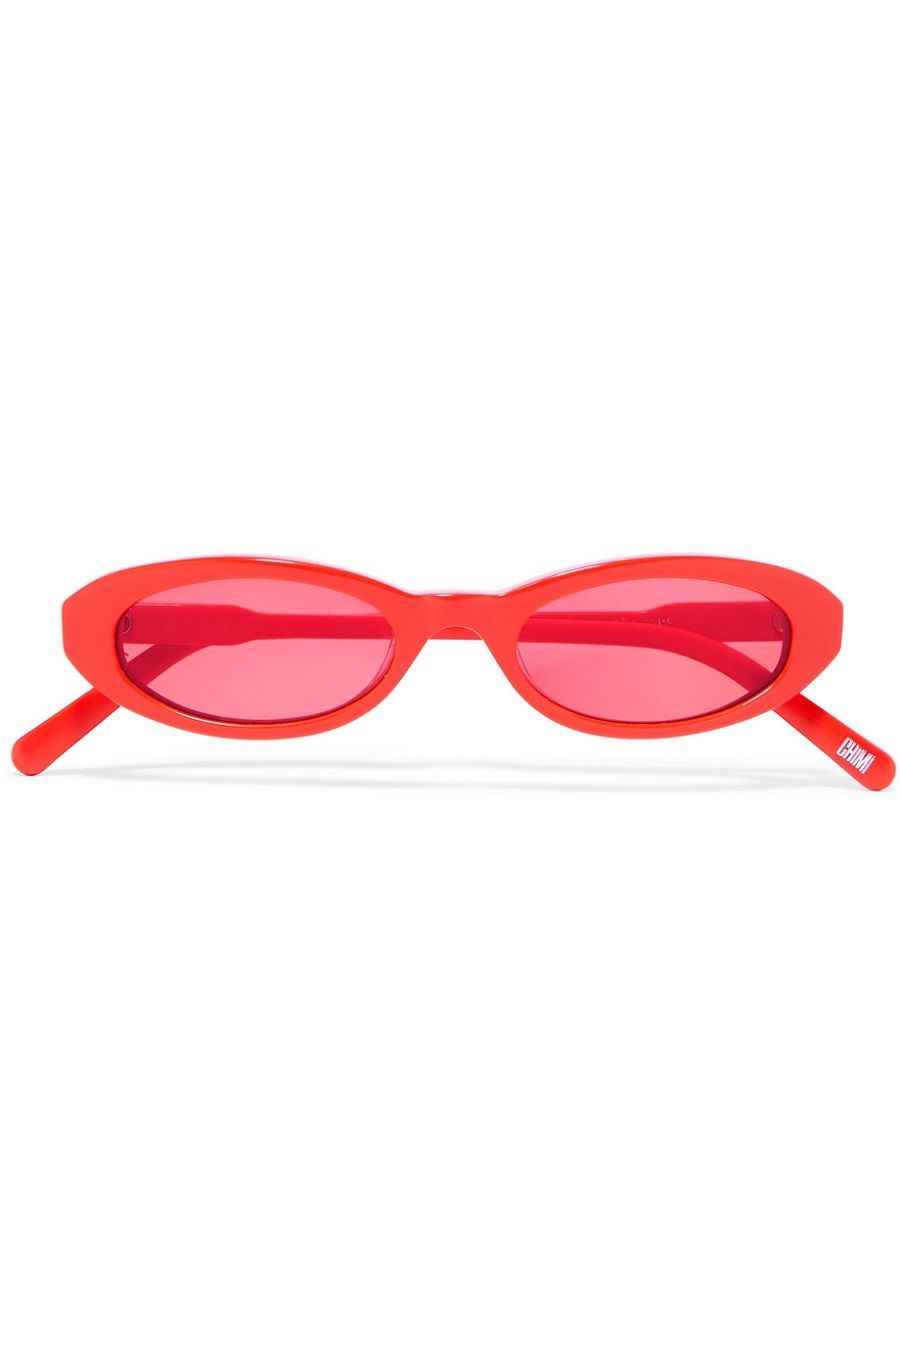 Now Trending: Sunglasses Unik!